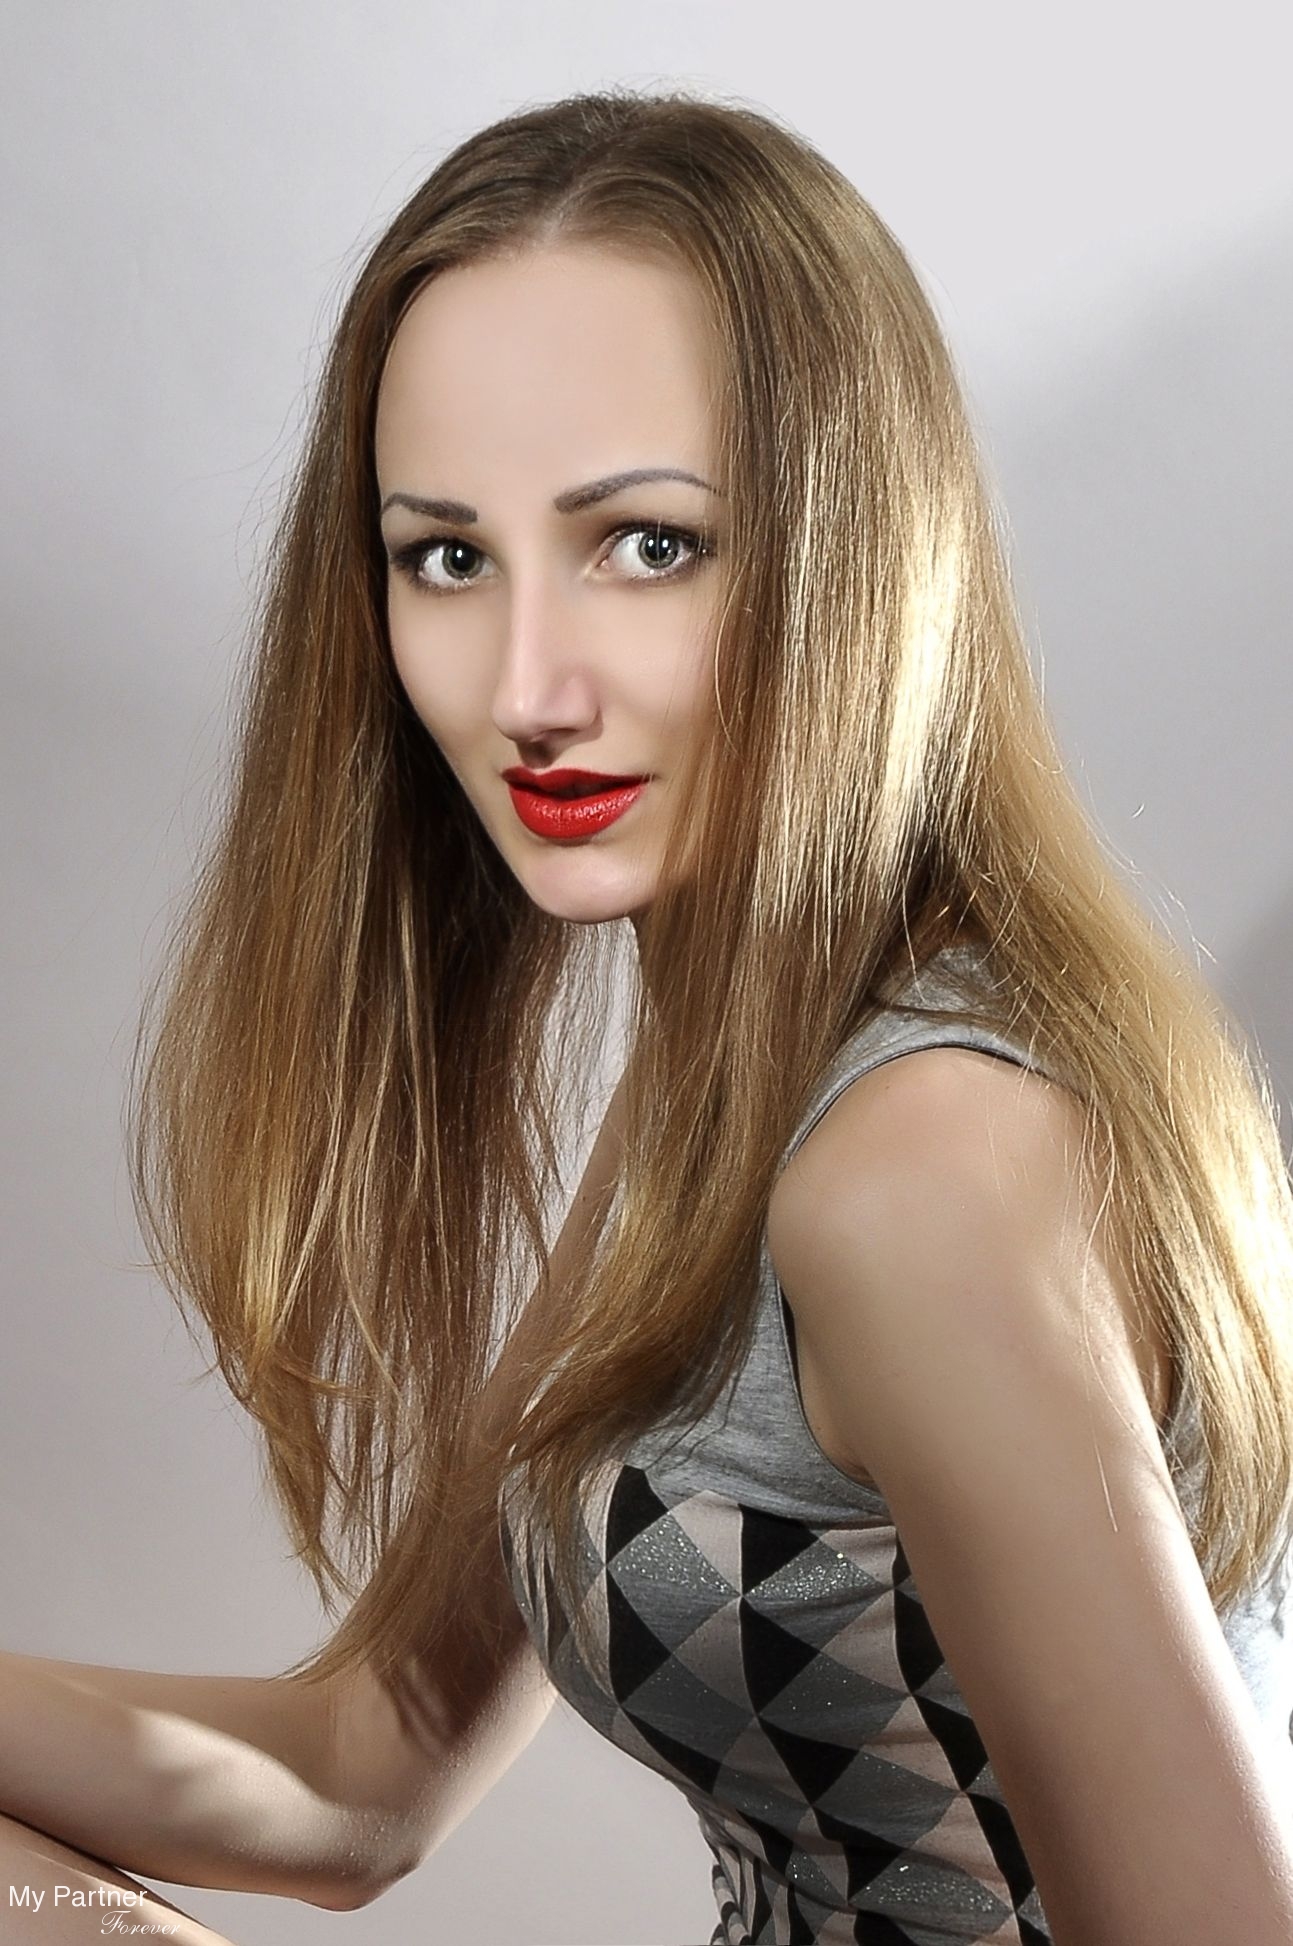 Dating Site to Meet Oksana from Kiev, Ukraine